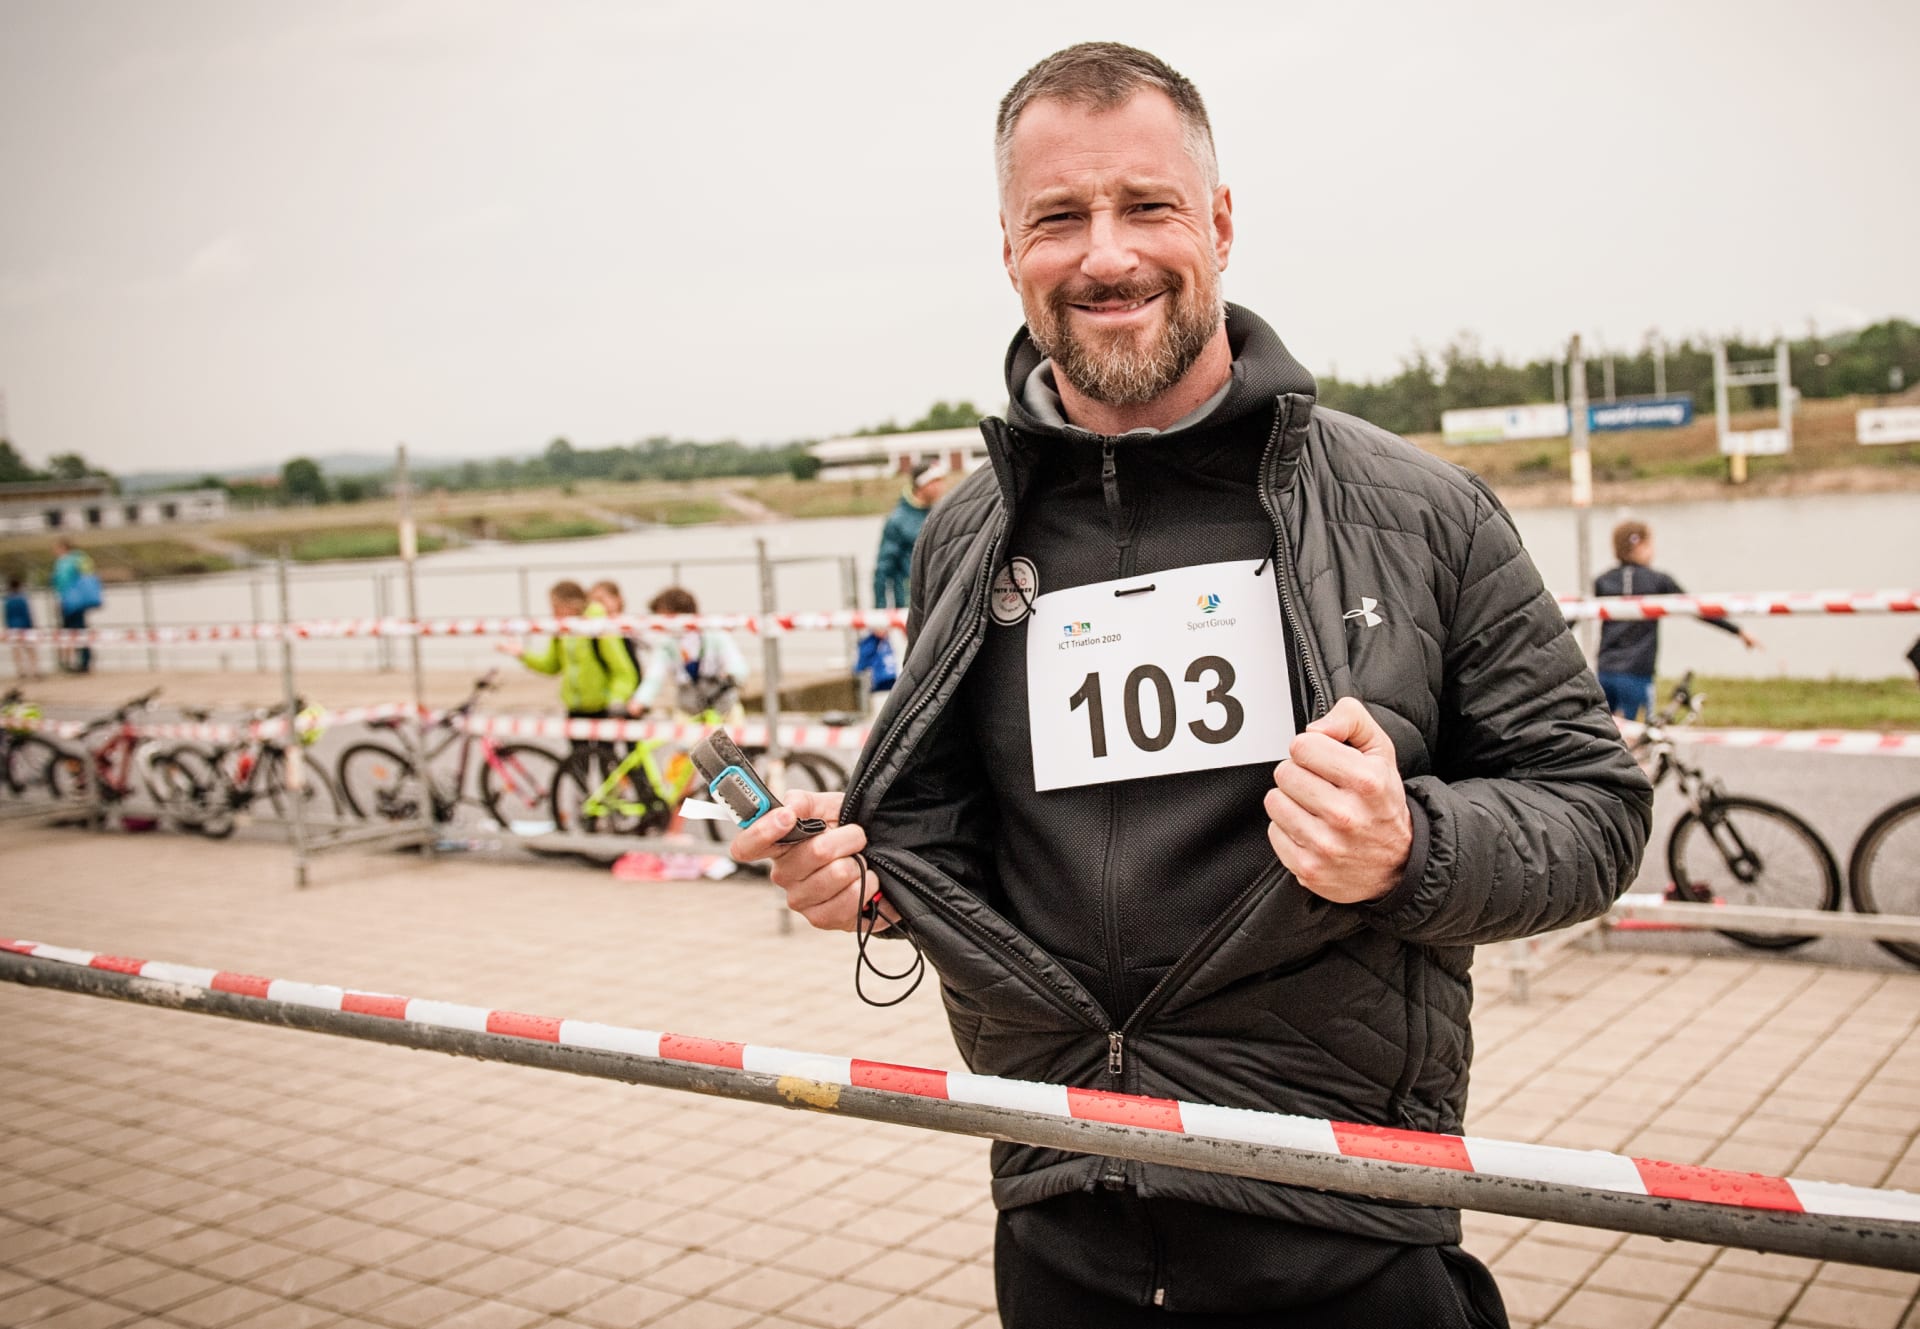 Hvězda CNN Prima NEWS Petr Vágner jako železný muž. V dešti zvládl náročný triatlon.